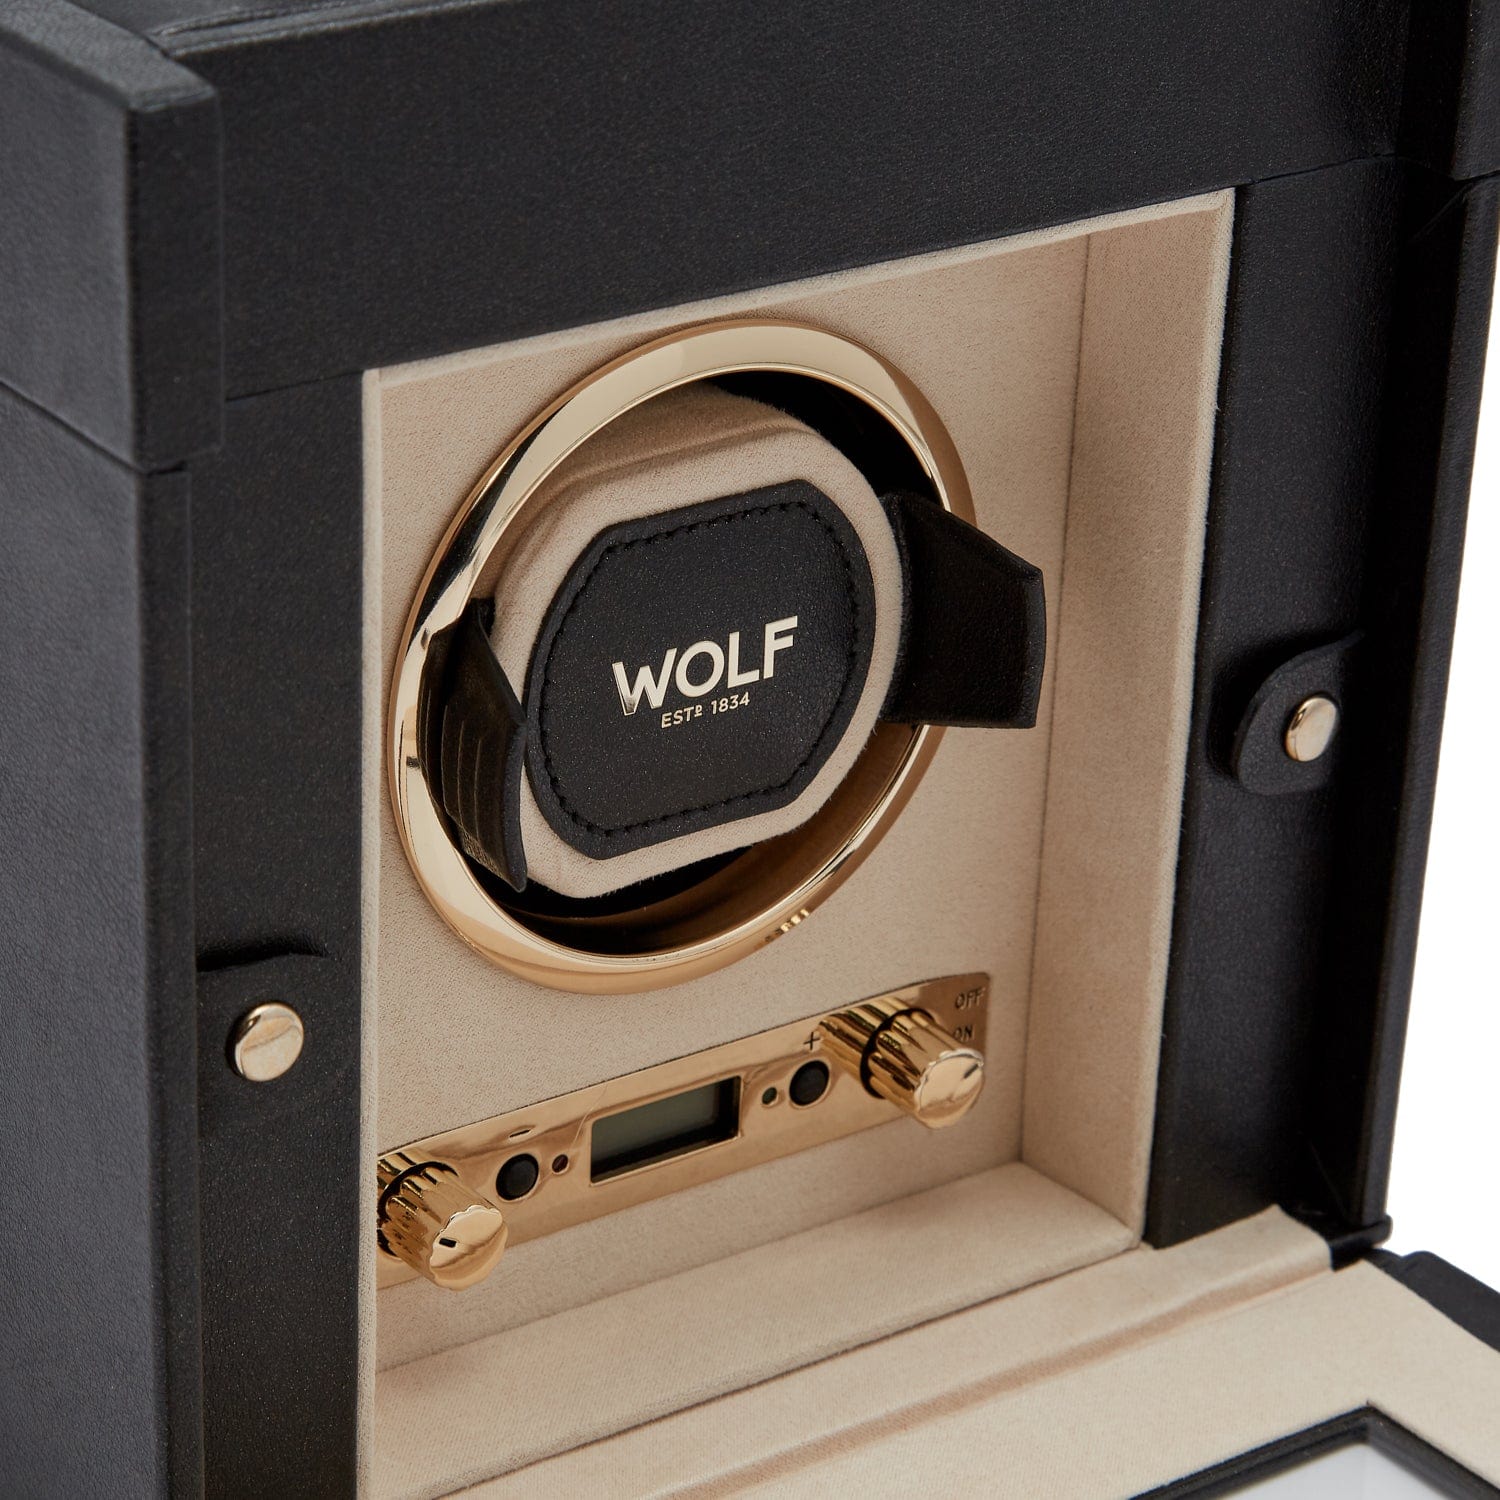 Wolf1834 Watch Winder Palermo Single Watch Winder with Jewelry Storage-Black Anthracite